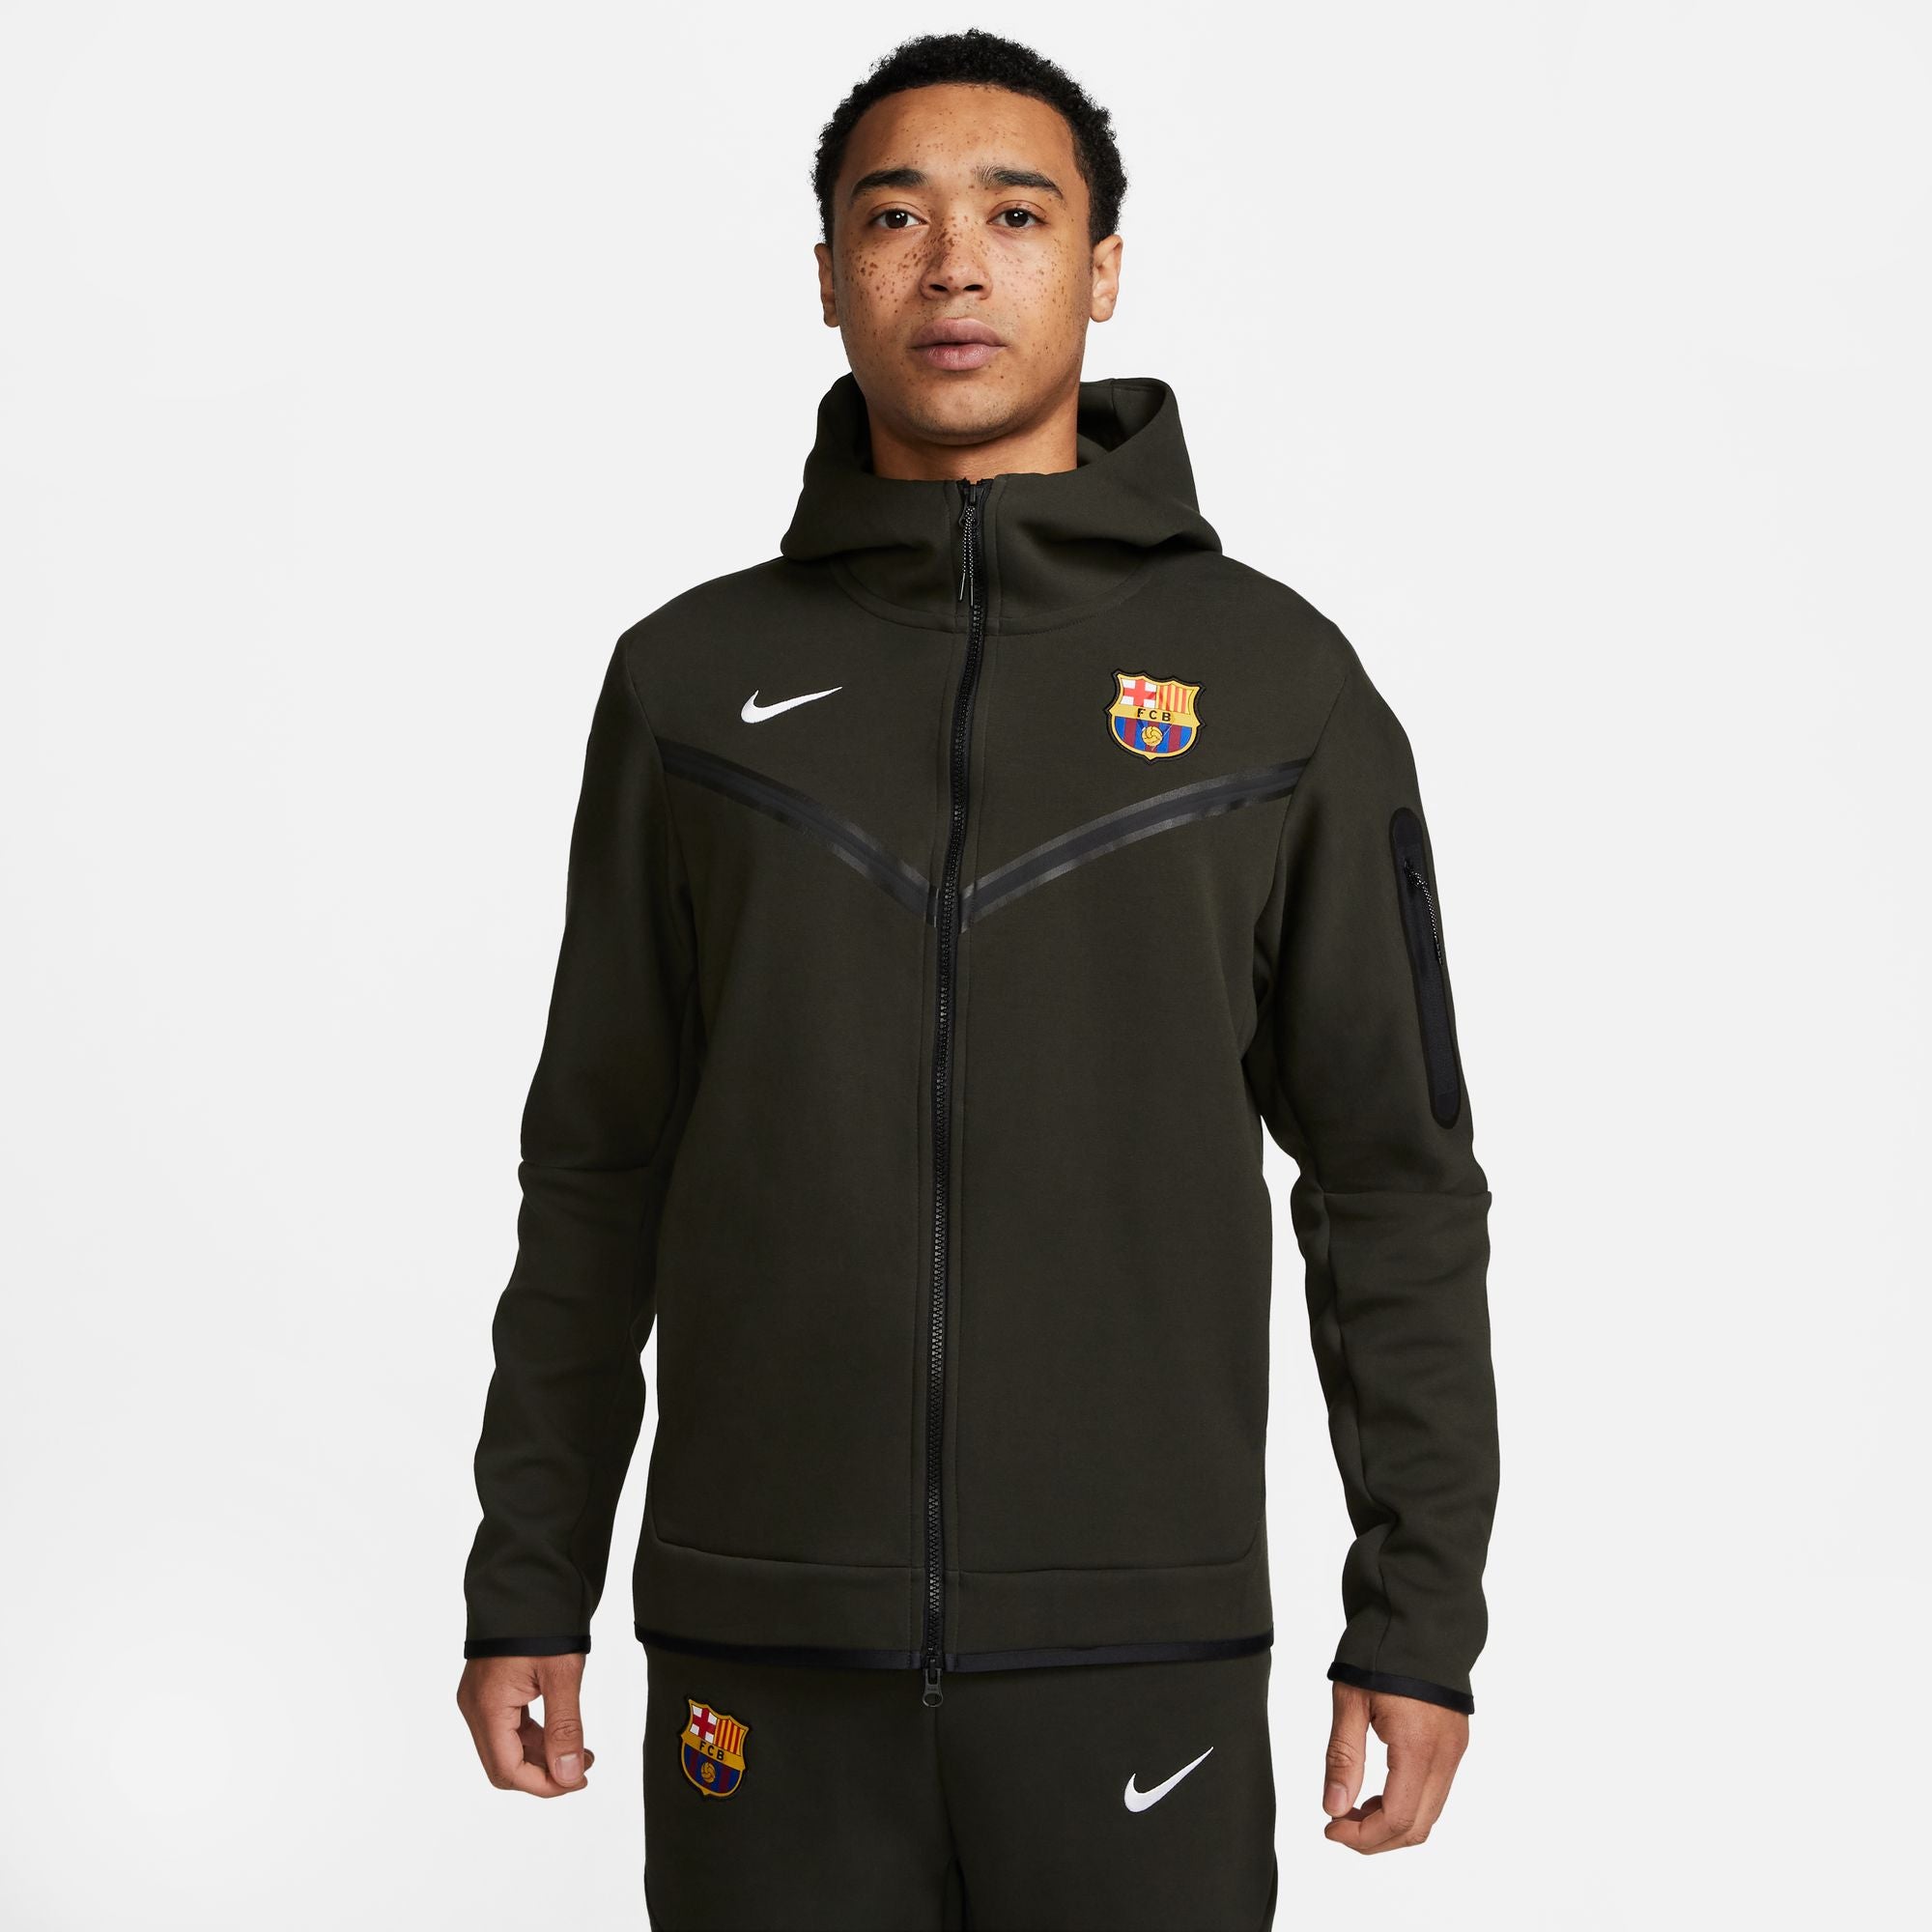 audiencia Político Contemporáneo Nike Men's FC Barcelona Tech Fleece Jacket Olive